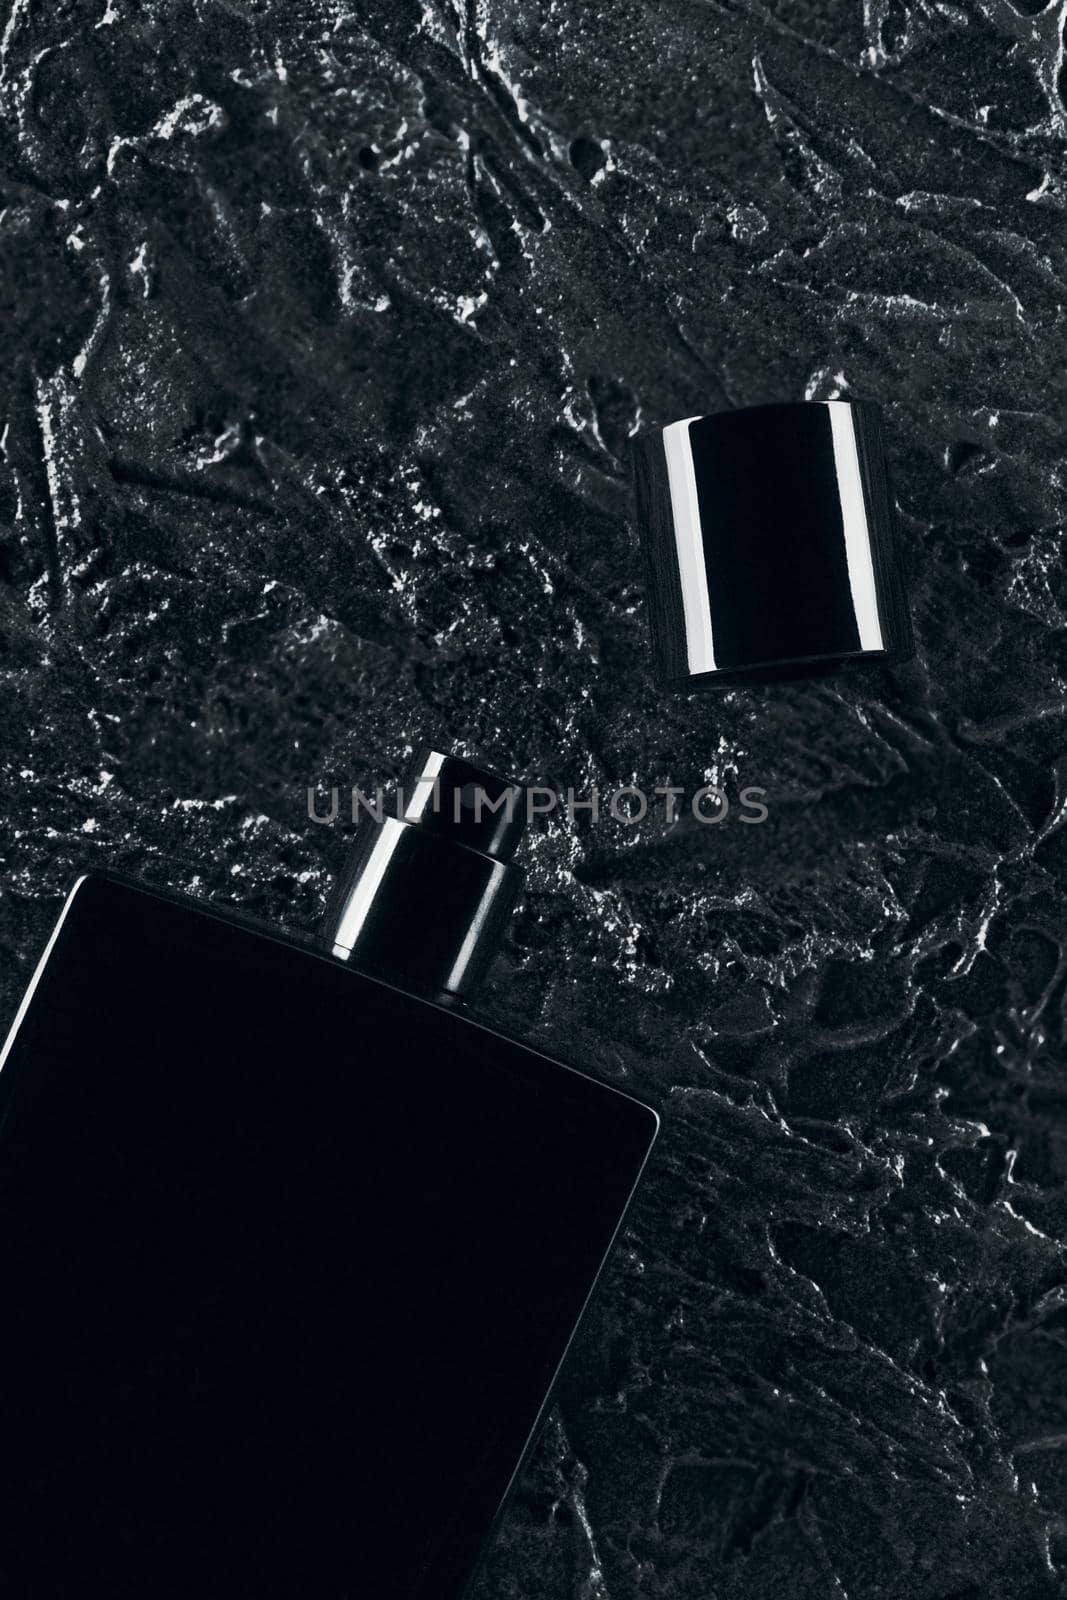 Men's fragrance of perfume or eau de toilette. Promotional photo of a black bottle on a dark background. Layout by SergeyPakulin